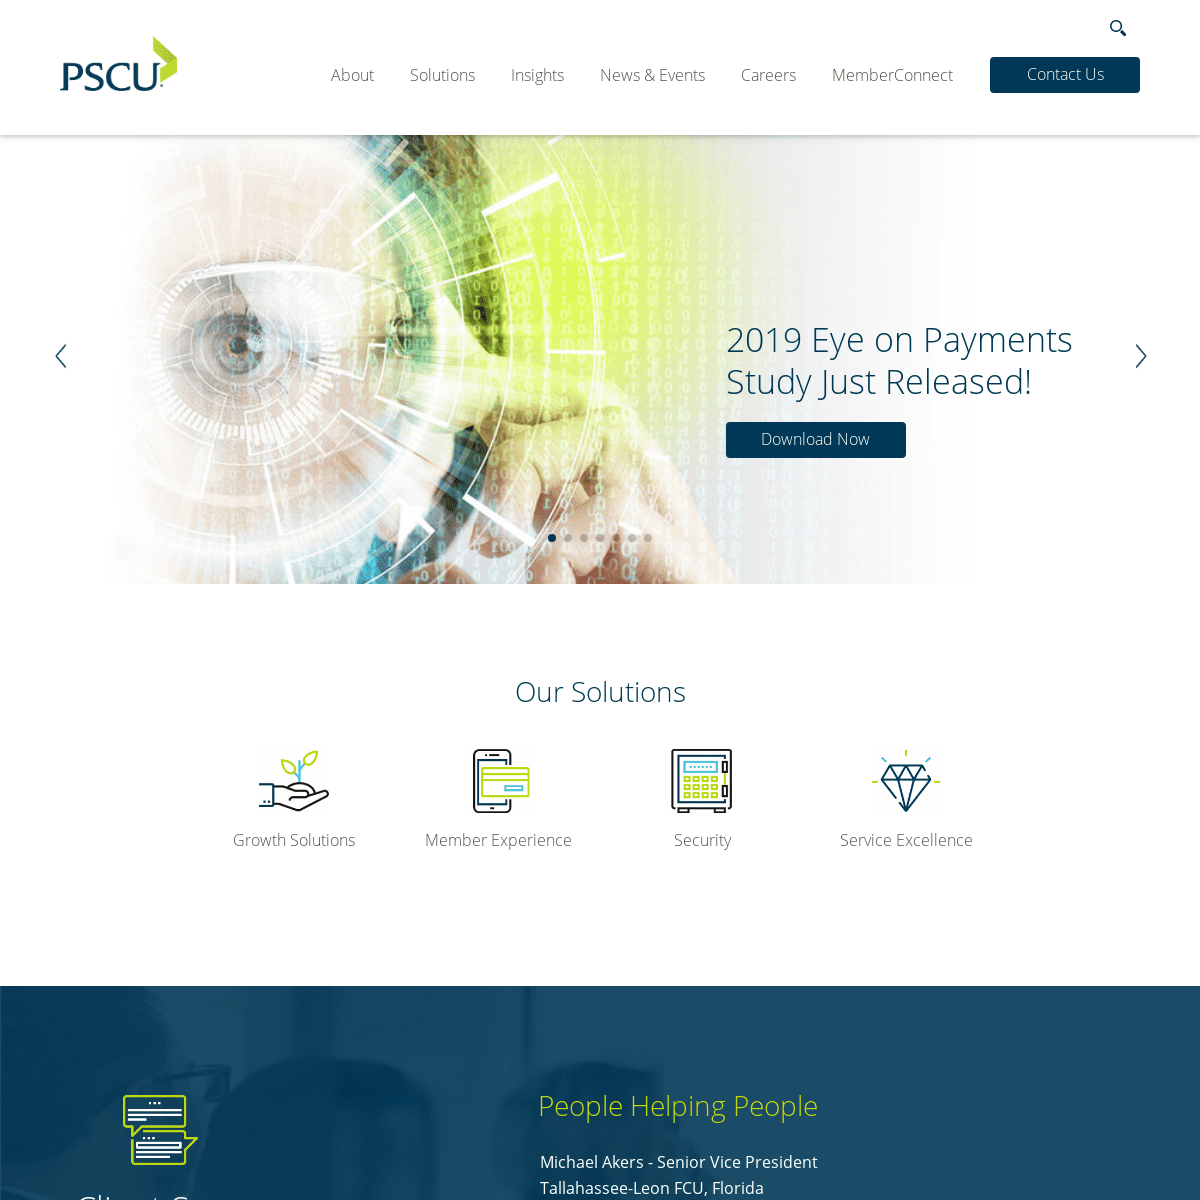 A complete backup of pscu.com